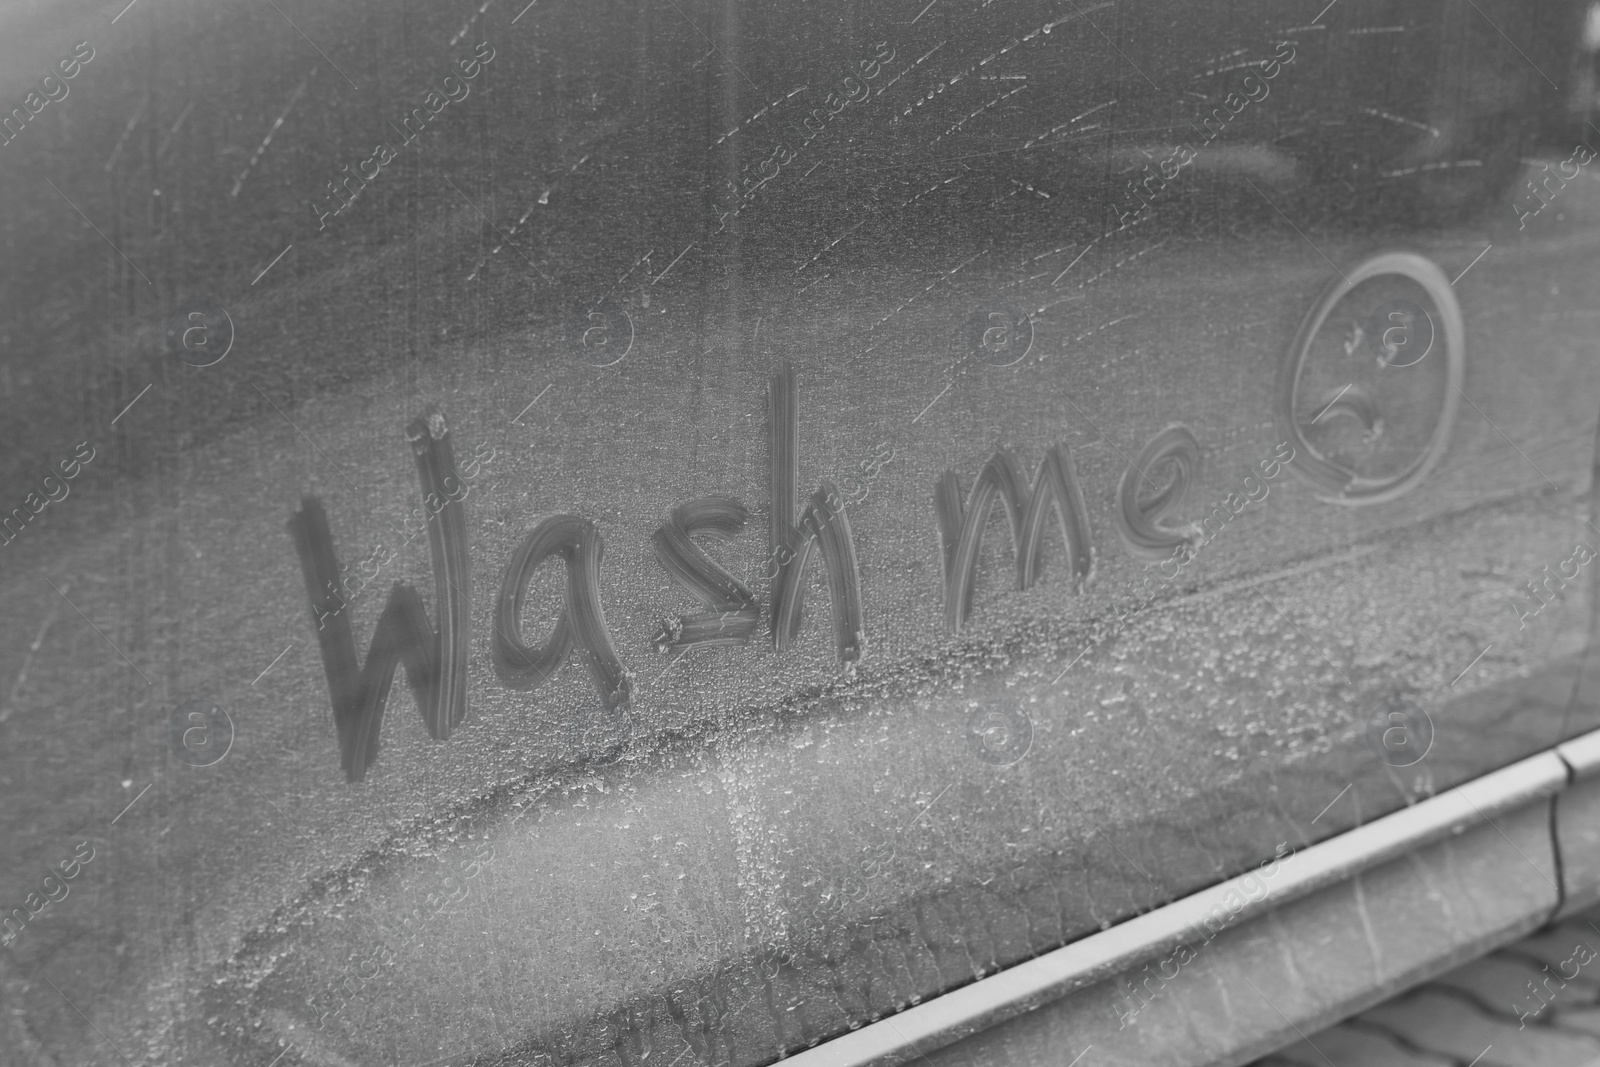 Photo of Phrase Wash Me and sad emoticon drawn on dirty car, closeup